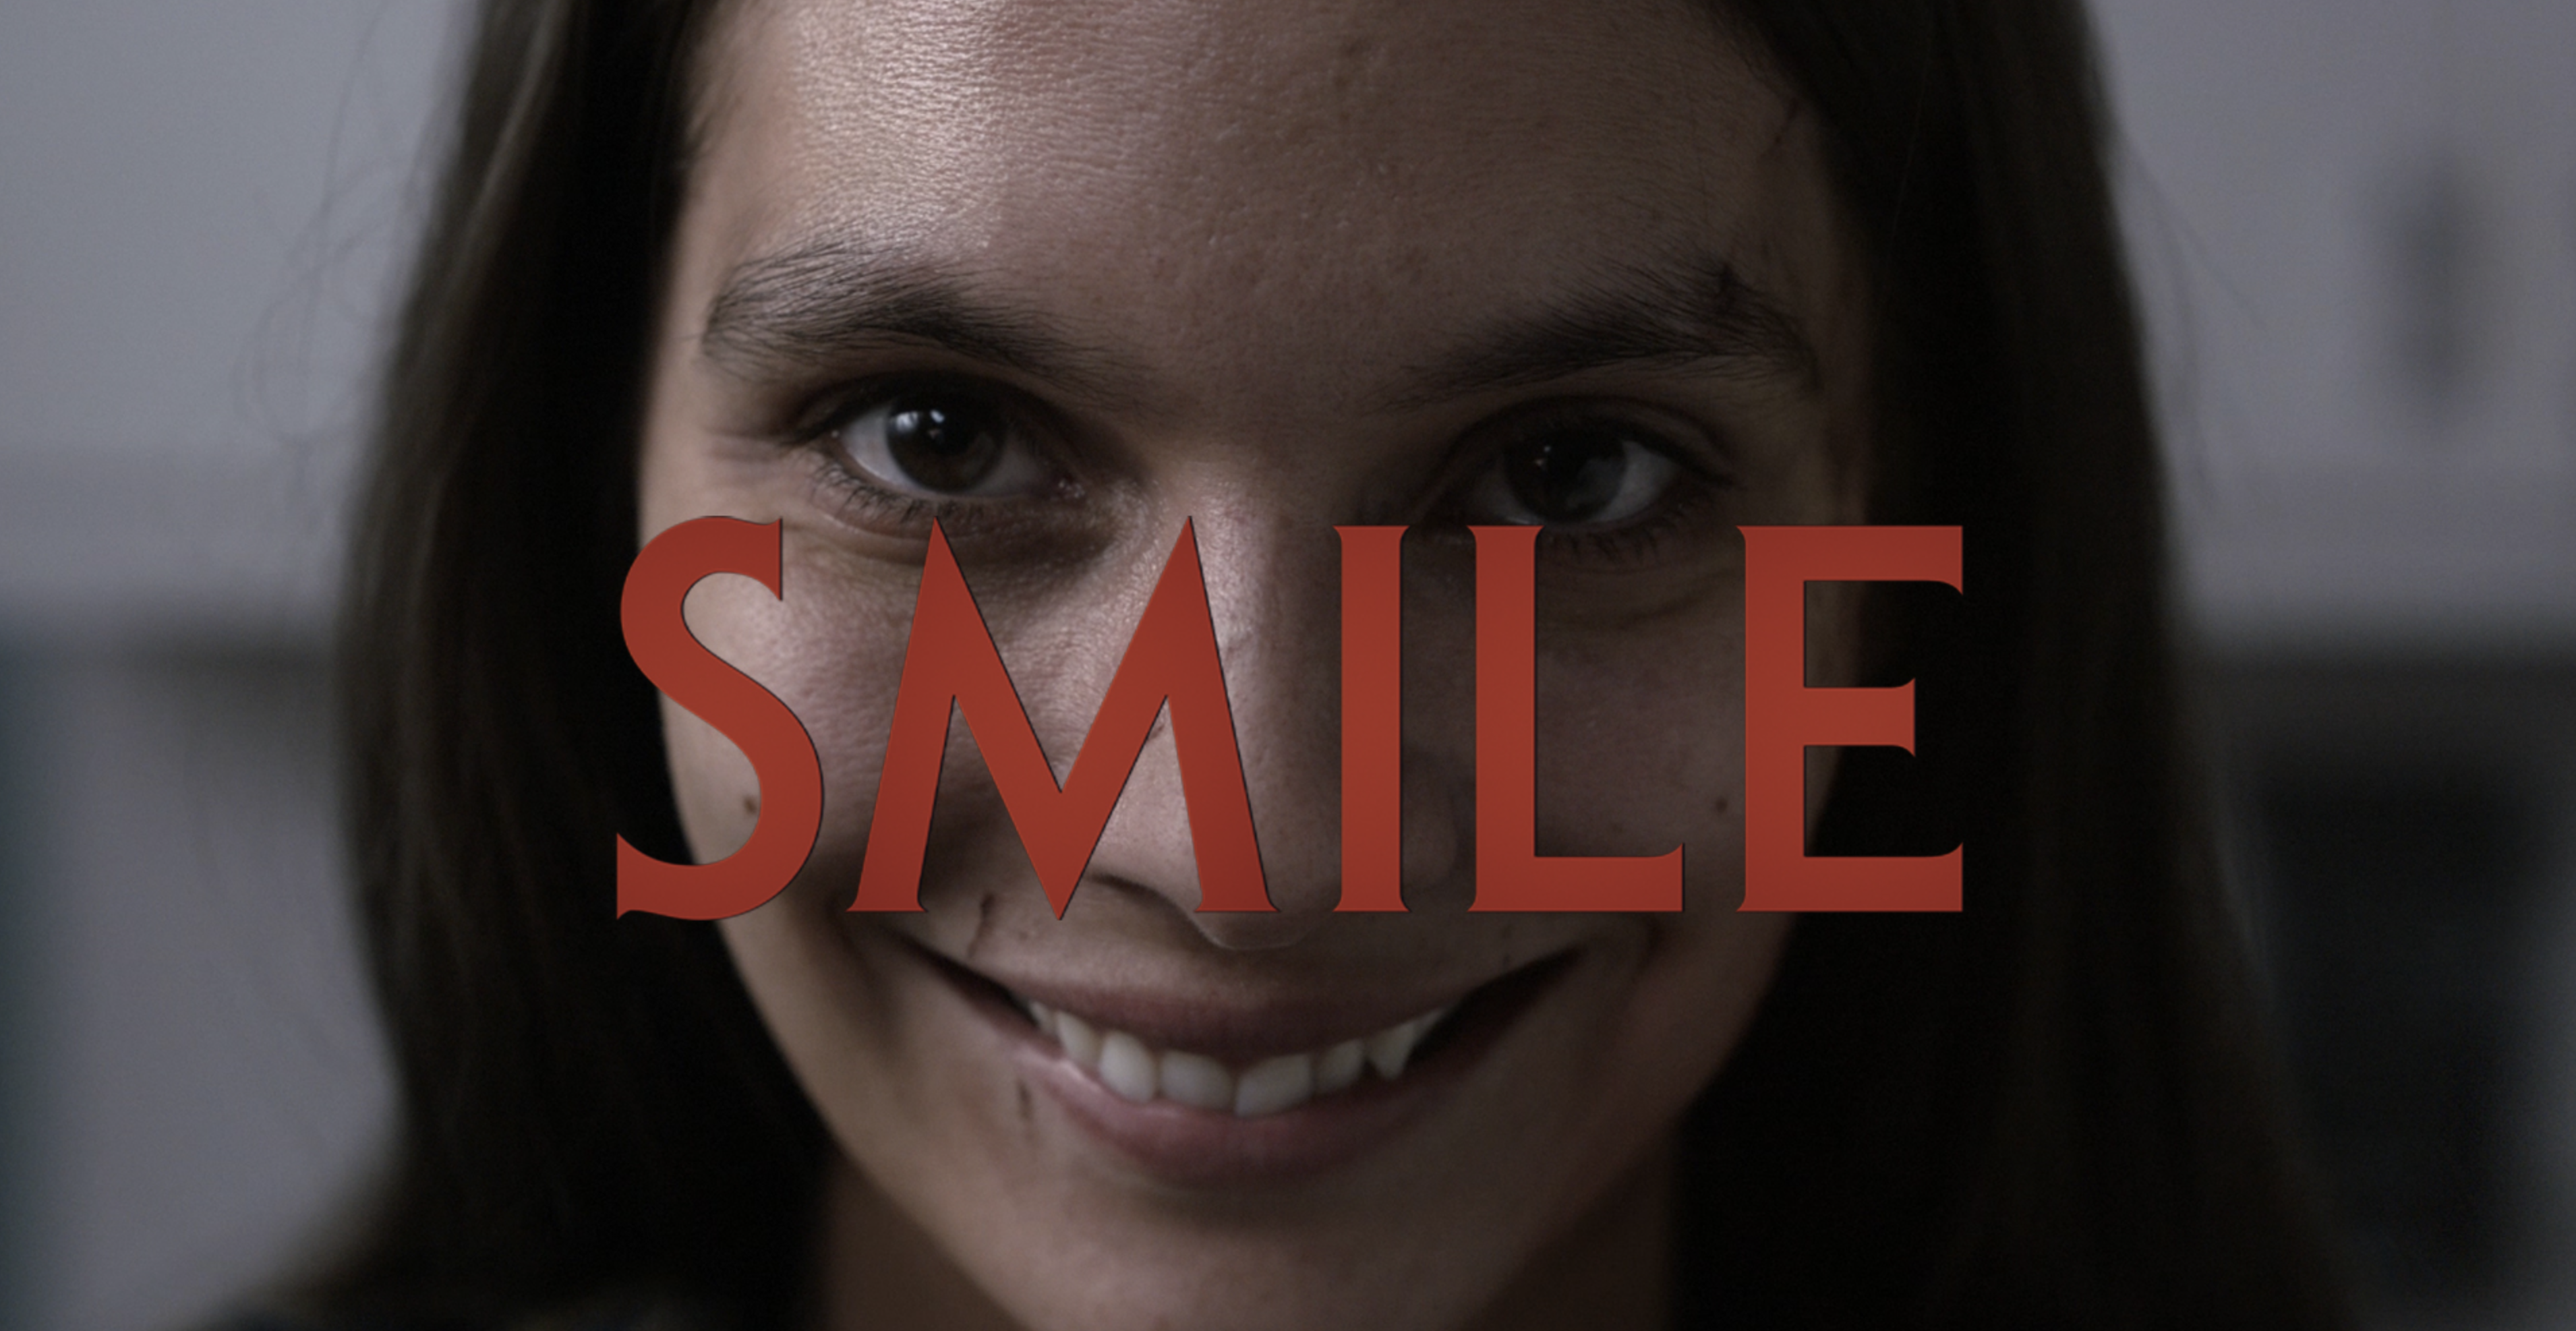 Smile promo photo via IMDb.